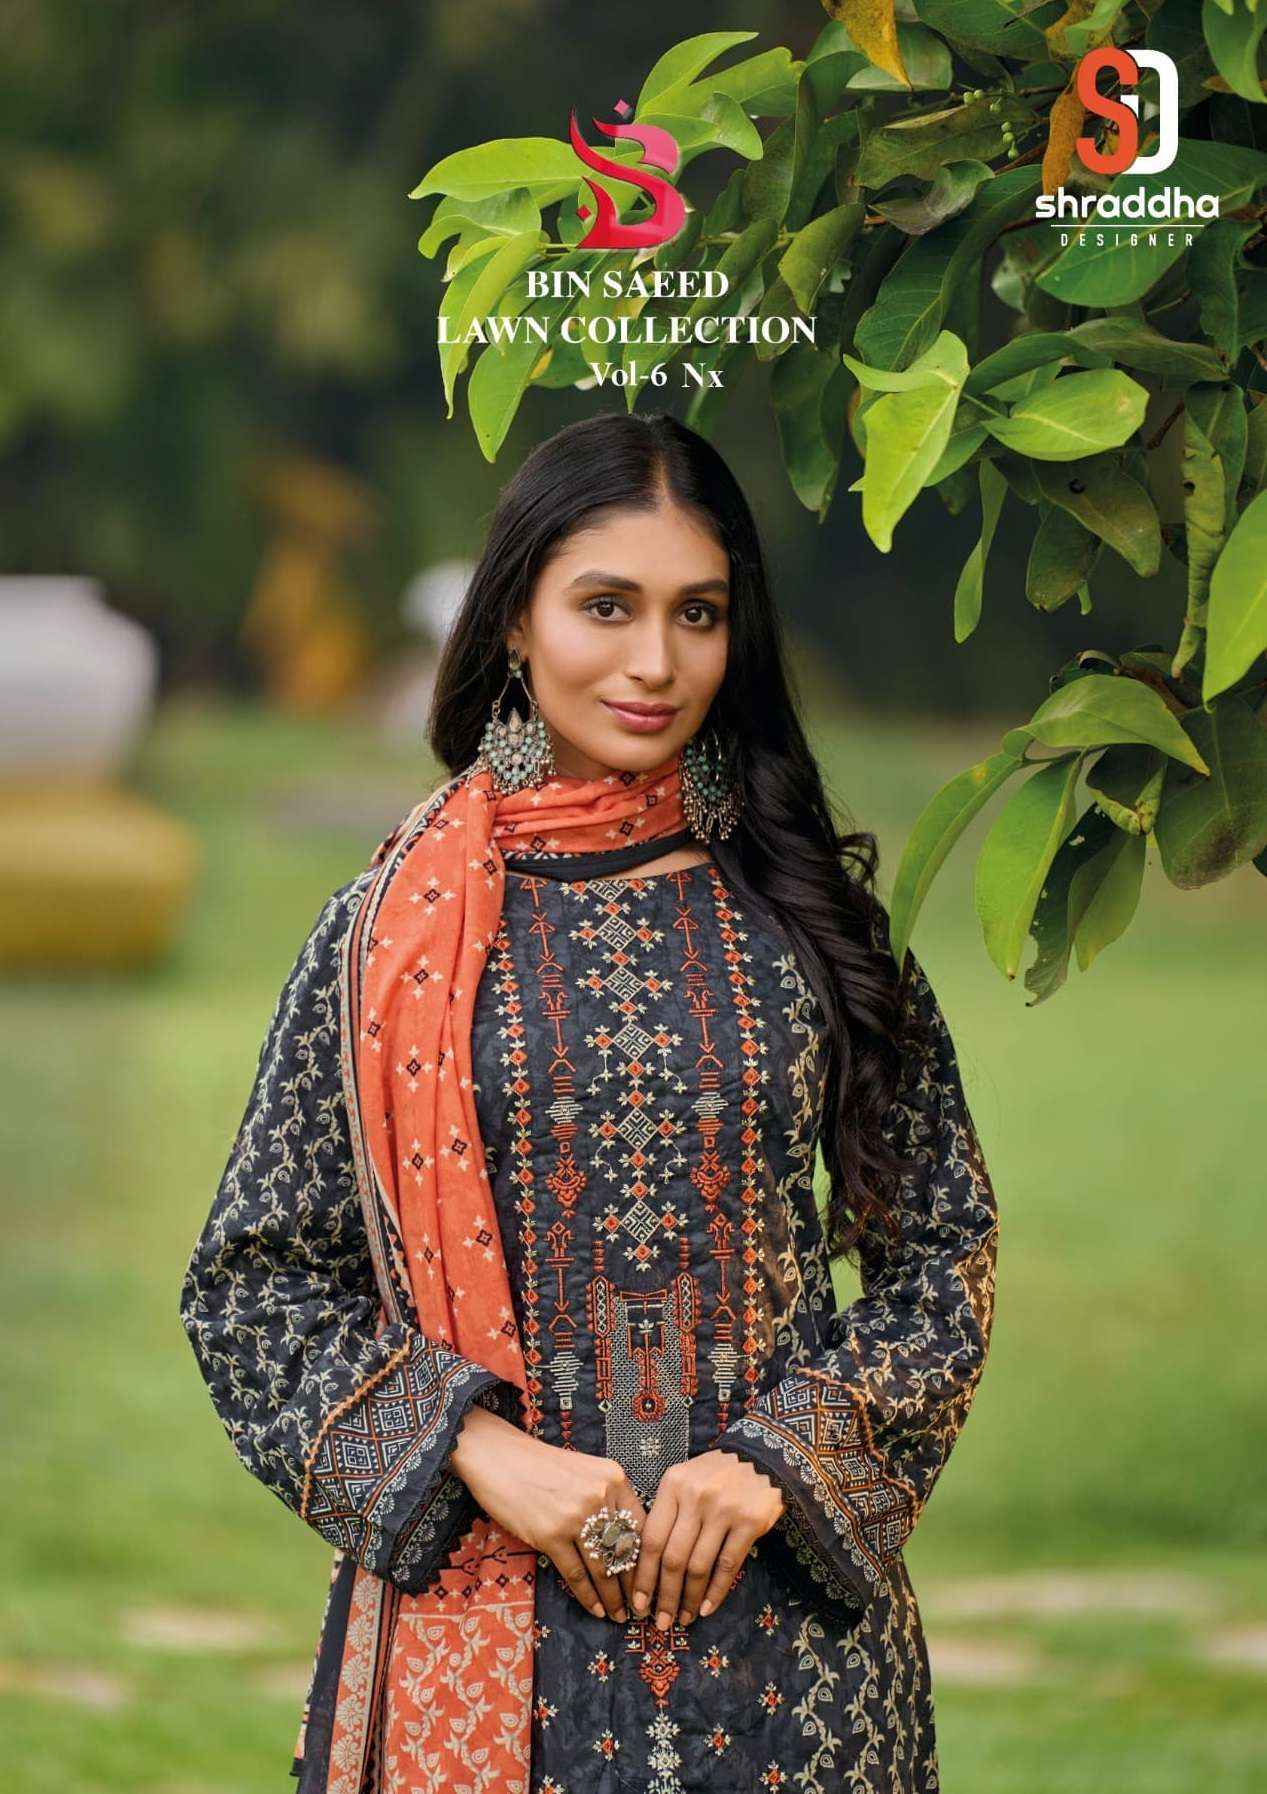 Sharaddha Designer Bin Saeed Lawn Collection Vol 6 Nx Cotton Dress Material 4 pcs Catalogue